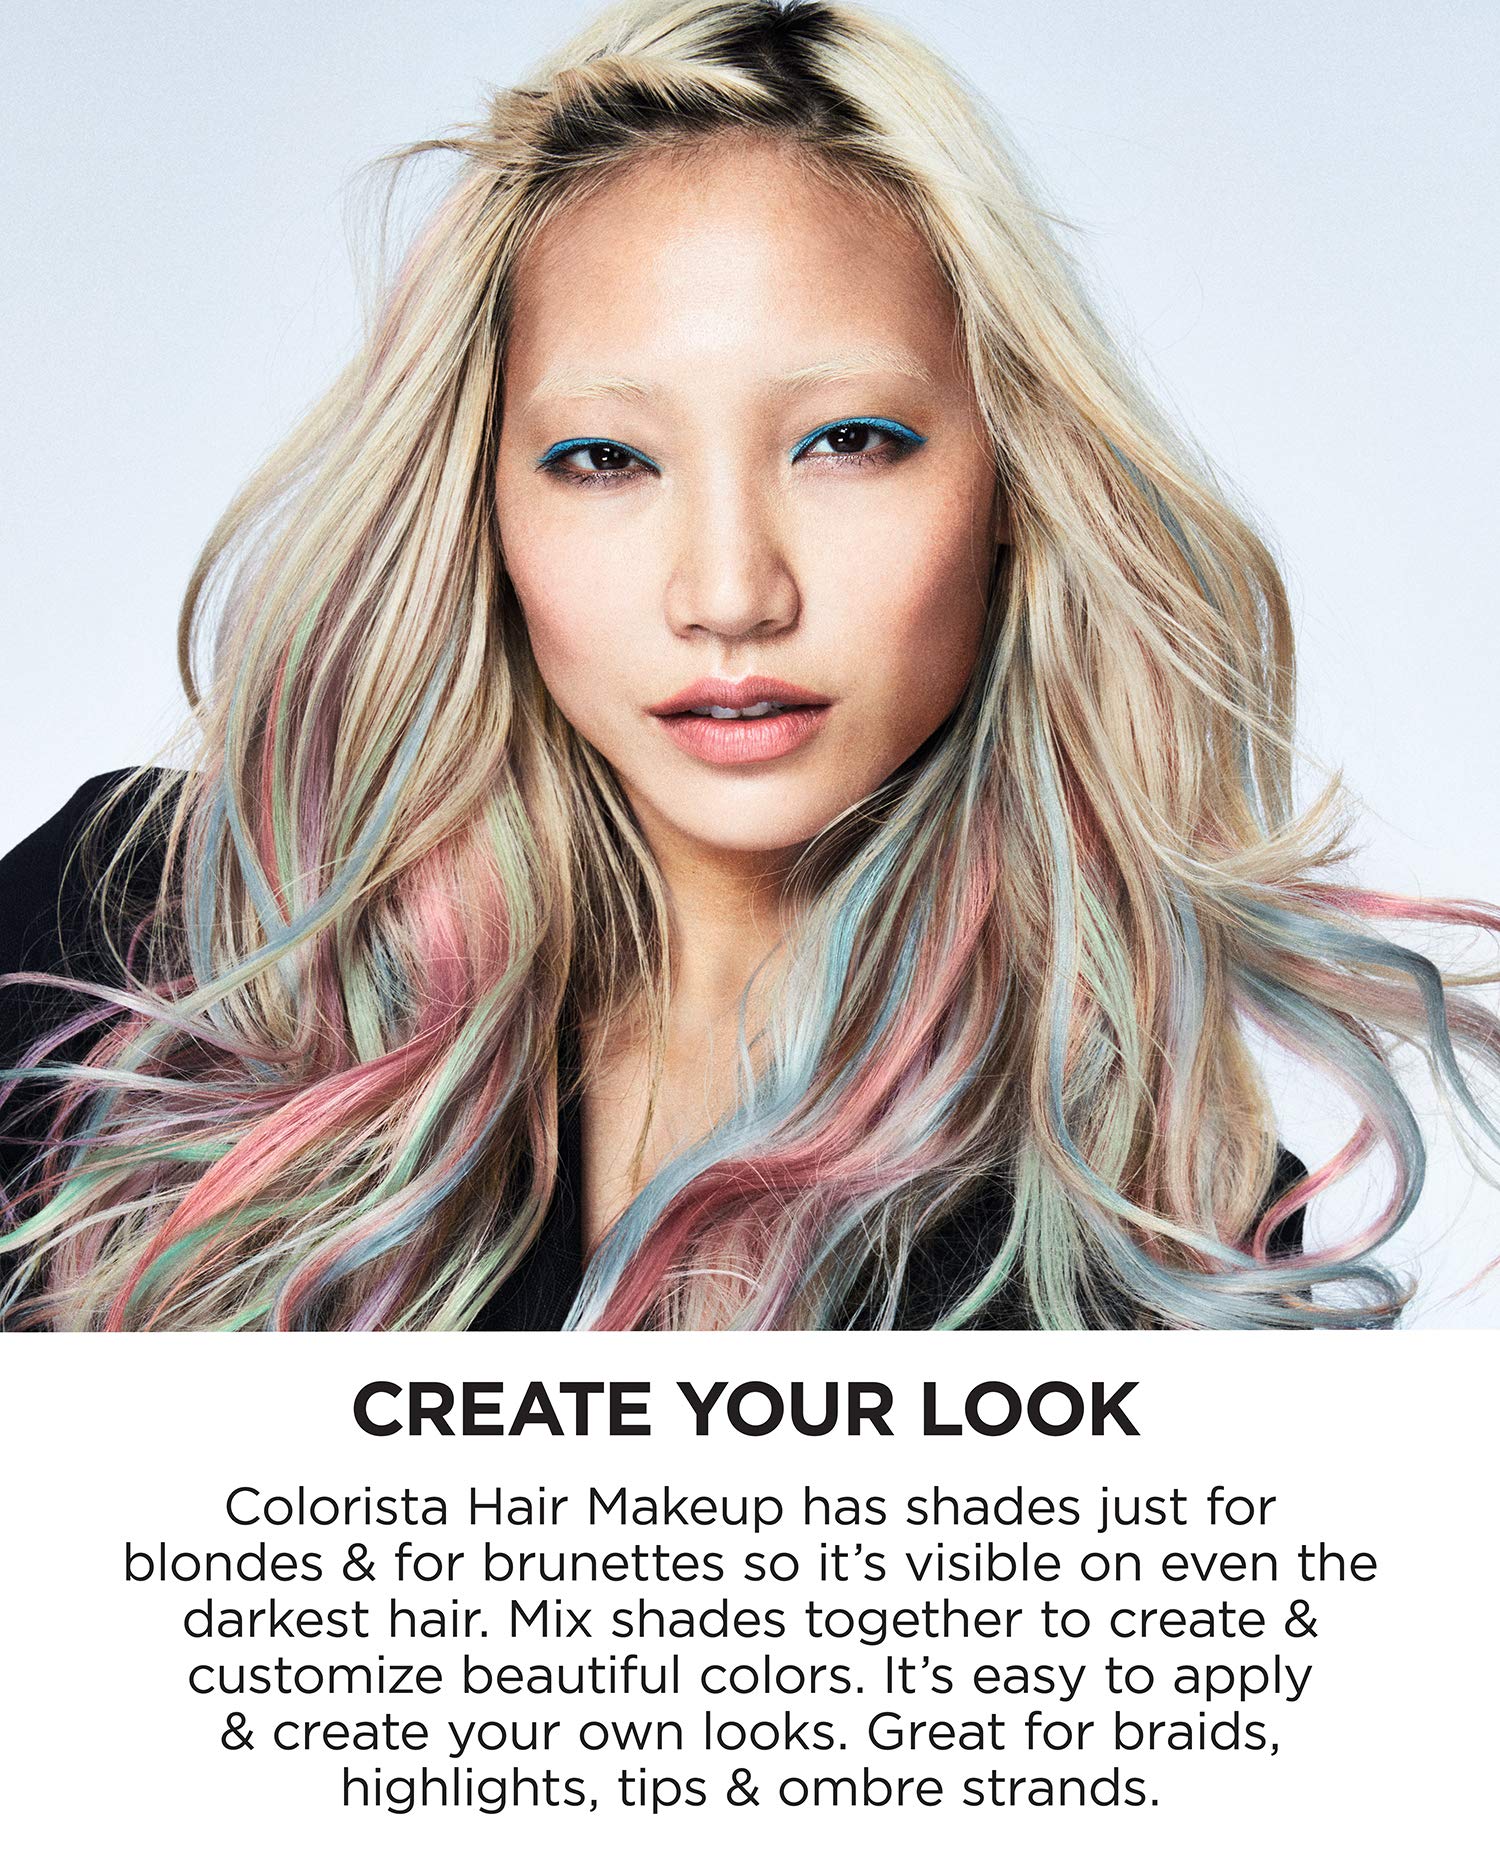 L'oreal Paris Hair Color Colorista Makeup 1-day for Blondes, Silverblue600, 1 Fluid Ounce